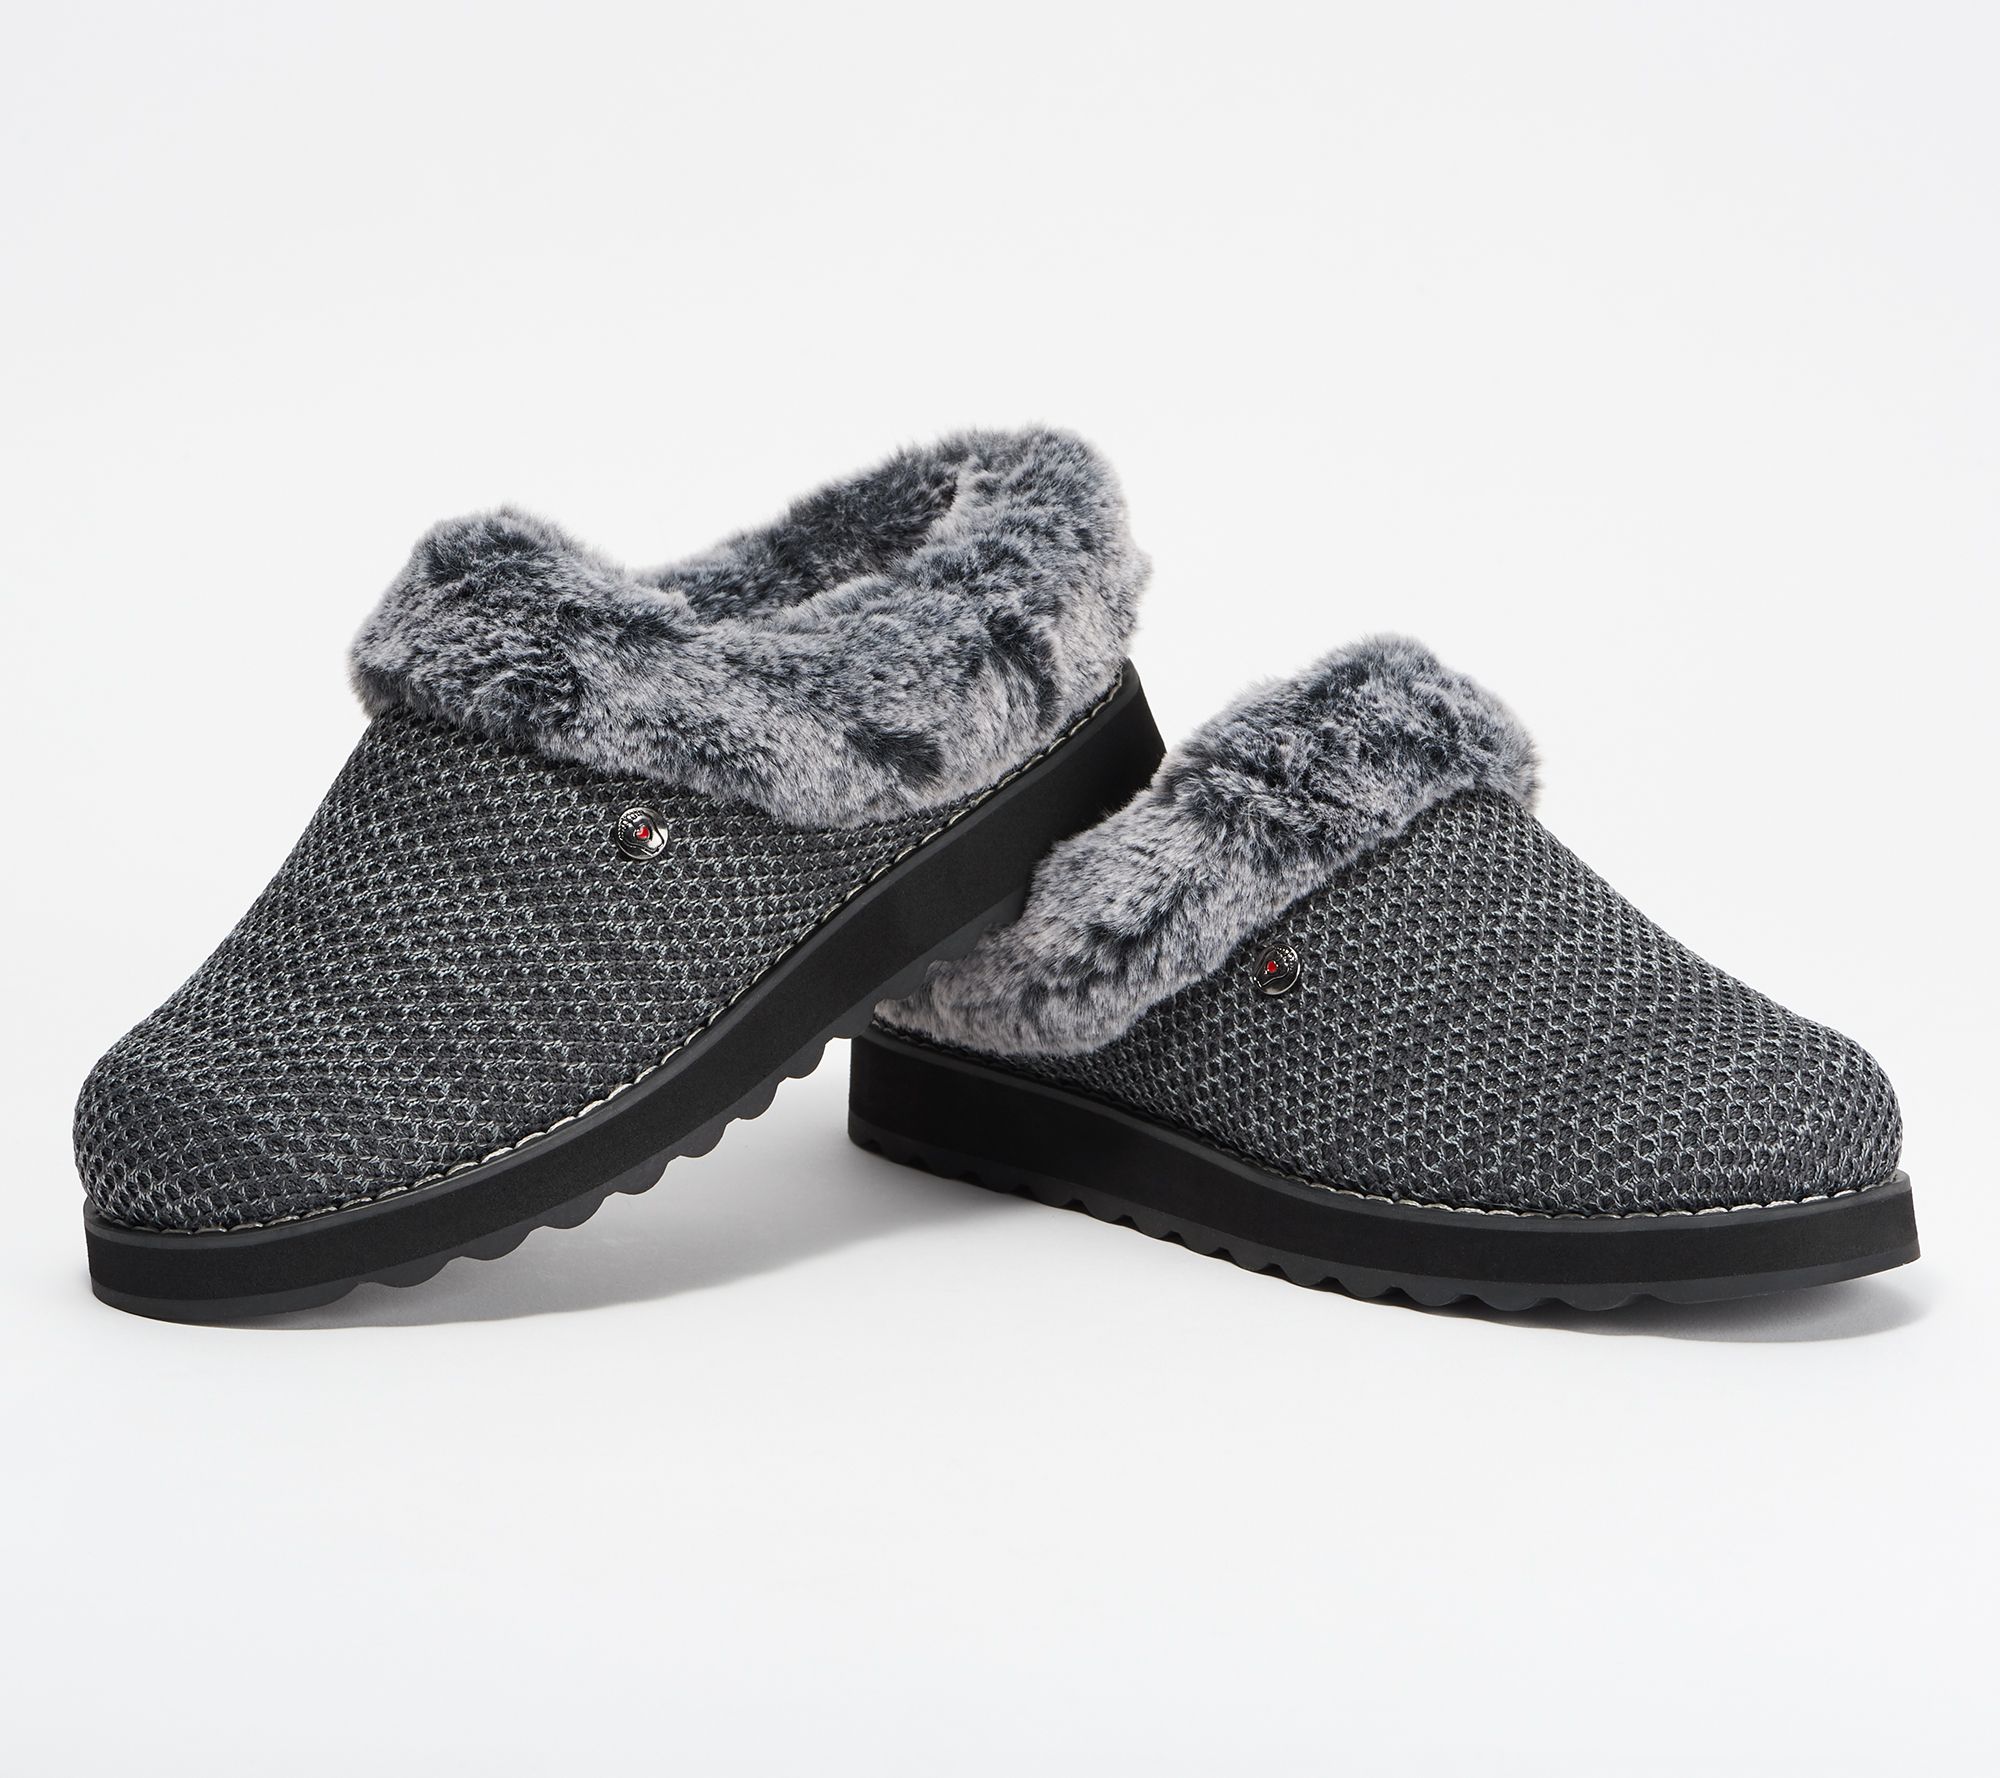 Skechers BOBs Knit Faux Fur Charcoal 